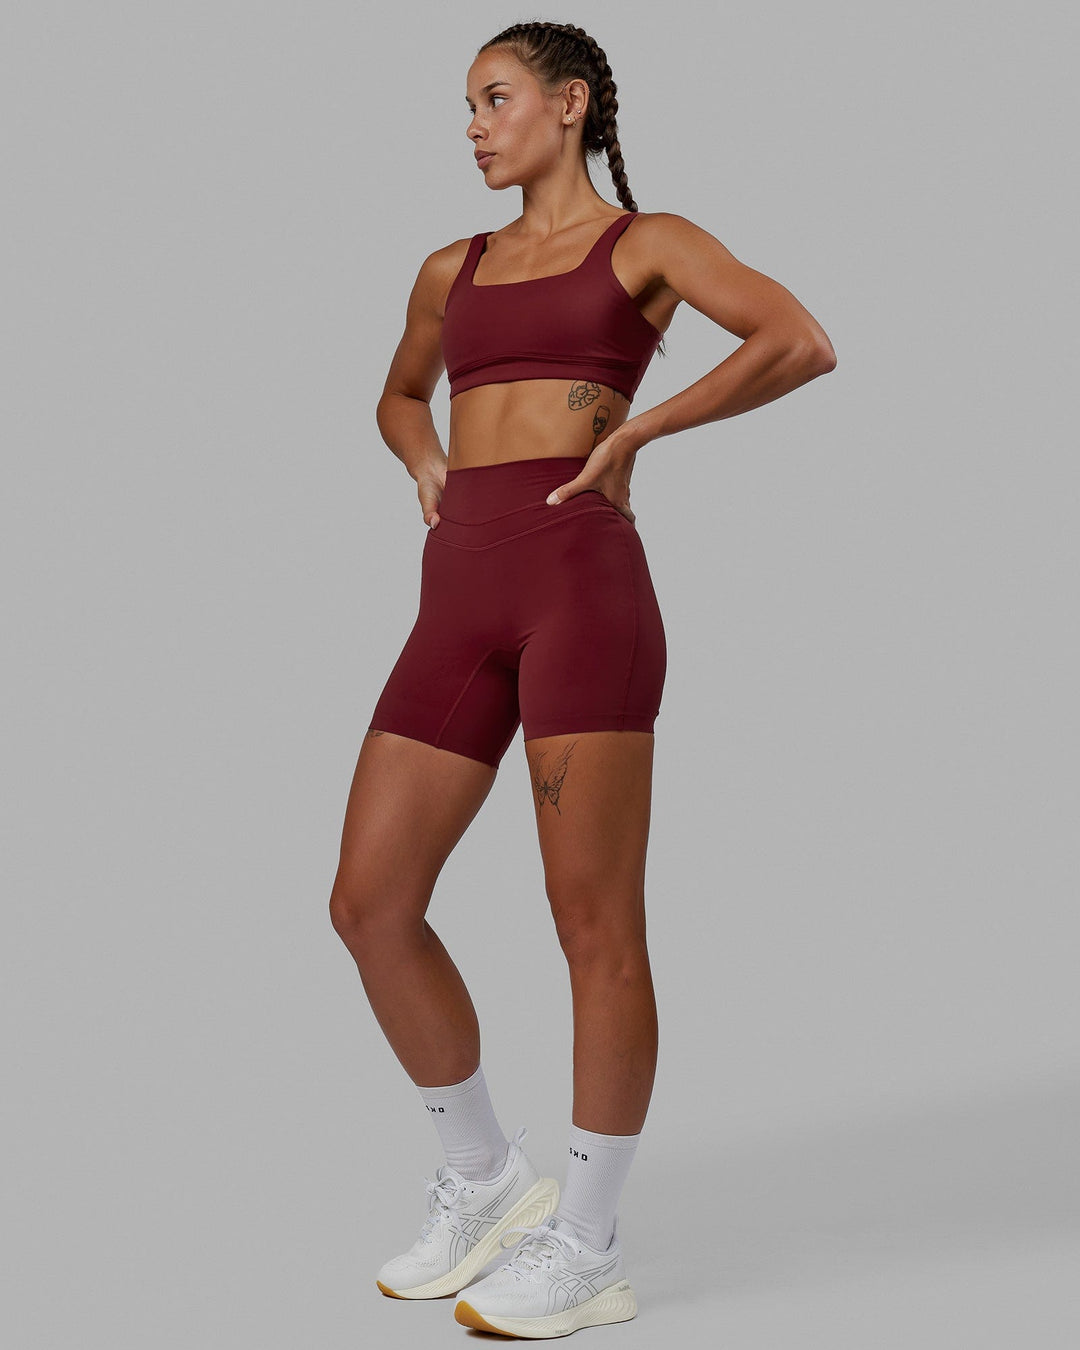 Woman wearing Elevation Sports Bra - Cranberry